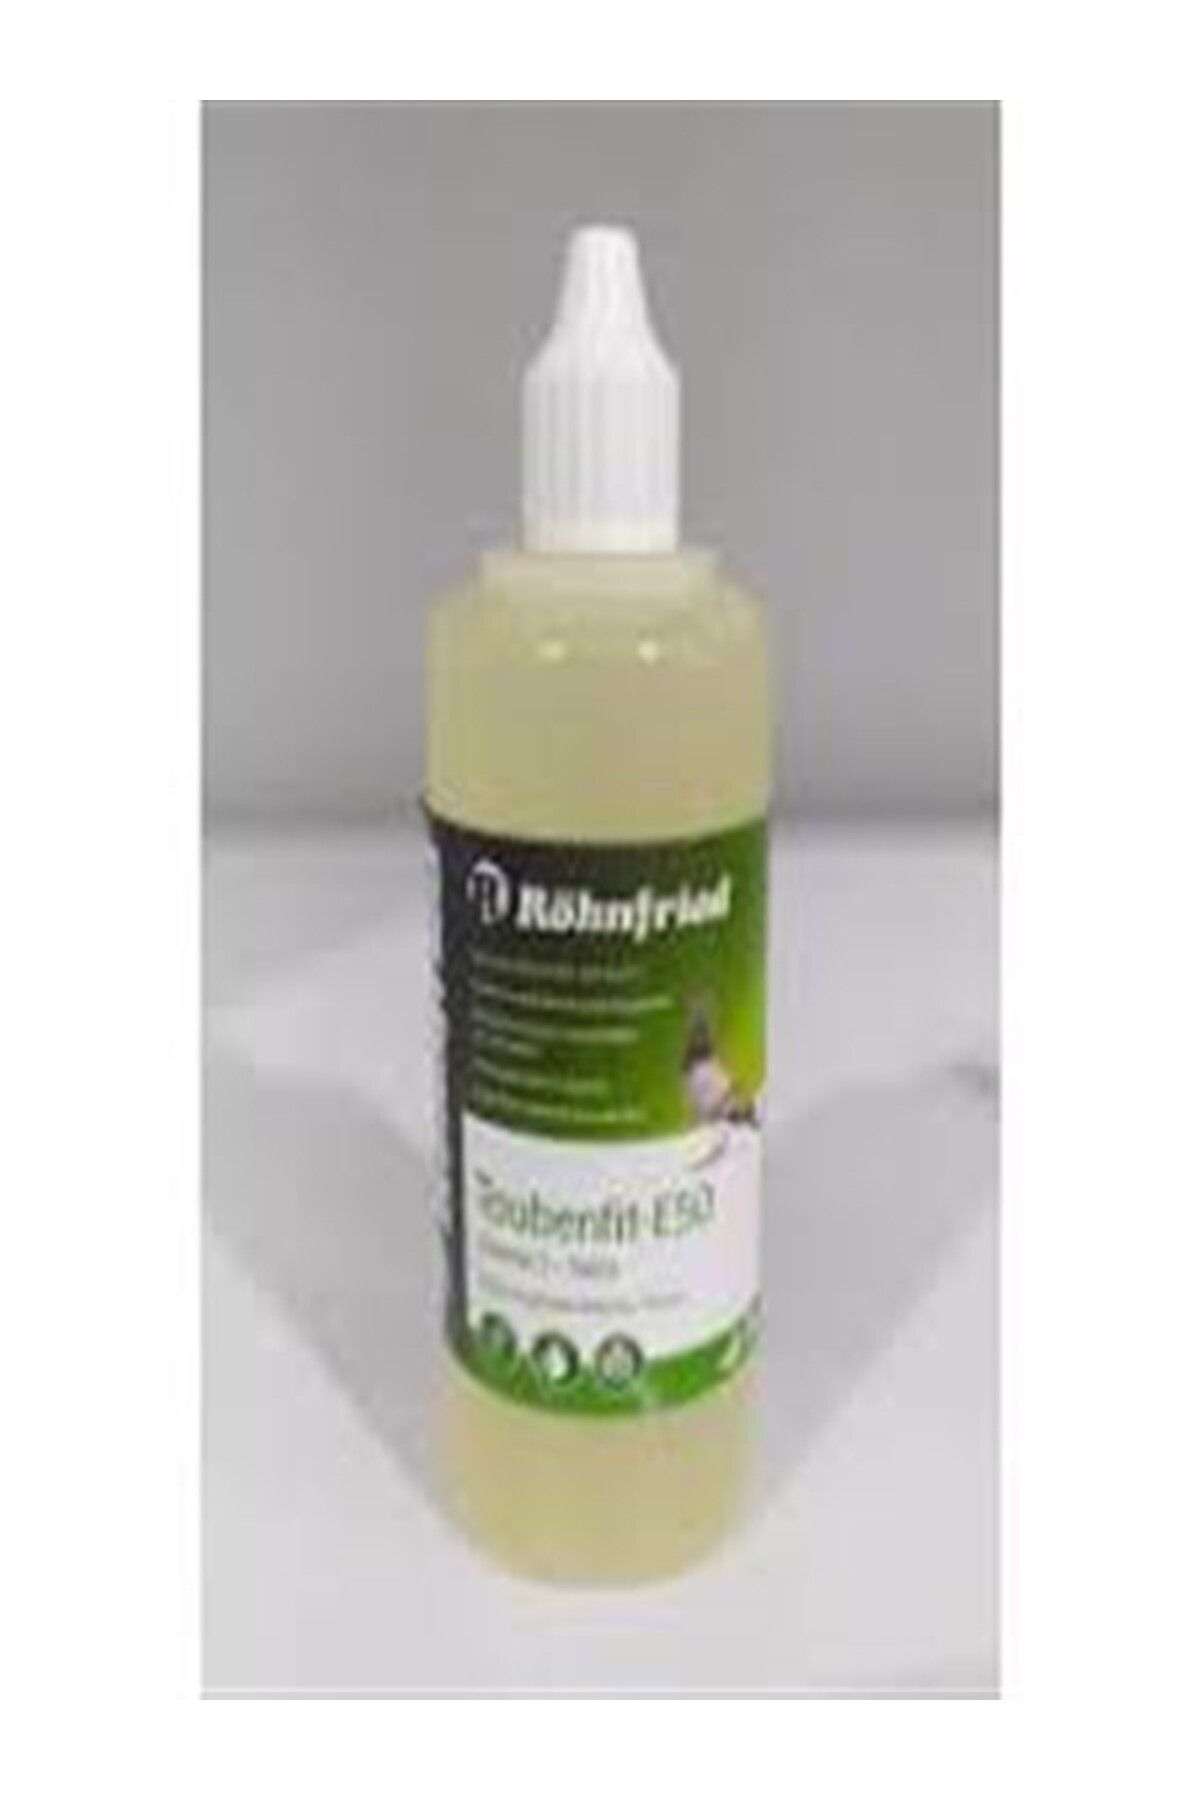 Tuğra Röhnfried Taubenfit E-50 Selenyum Kafes Kuşu Üreme Vitamini Takviyesi 100 ml